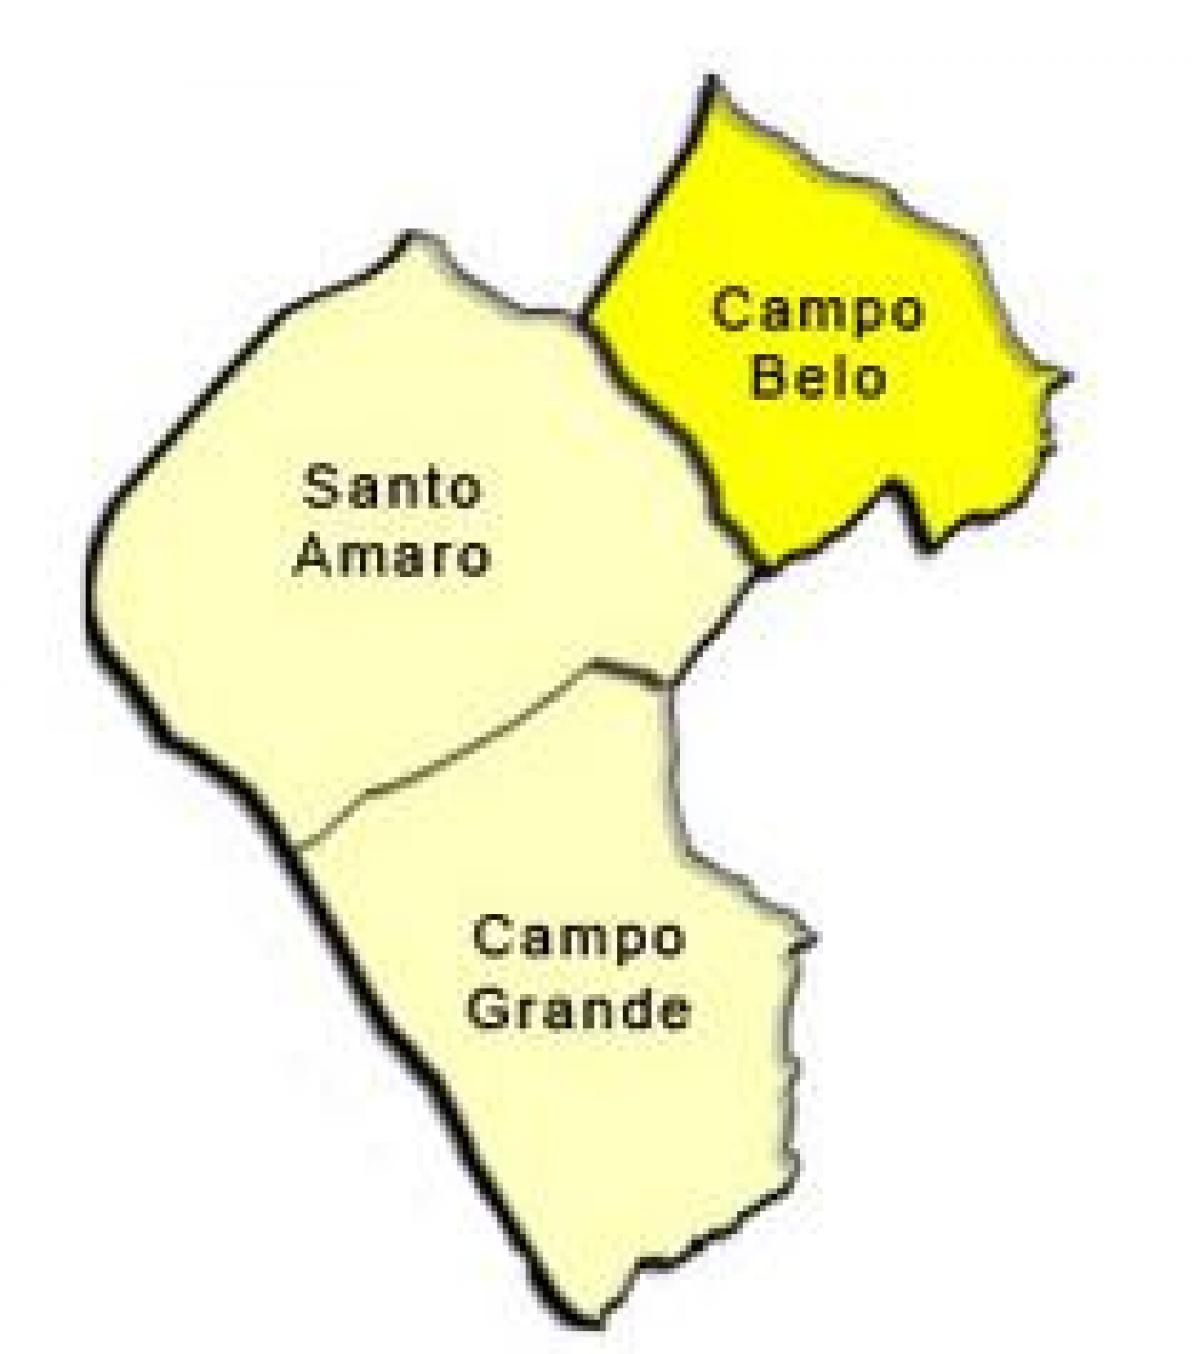 Mapa sub-prefekturze Santo Amaro